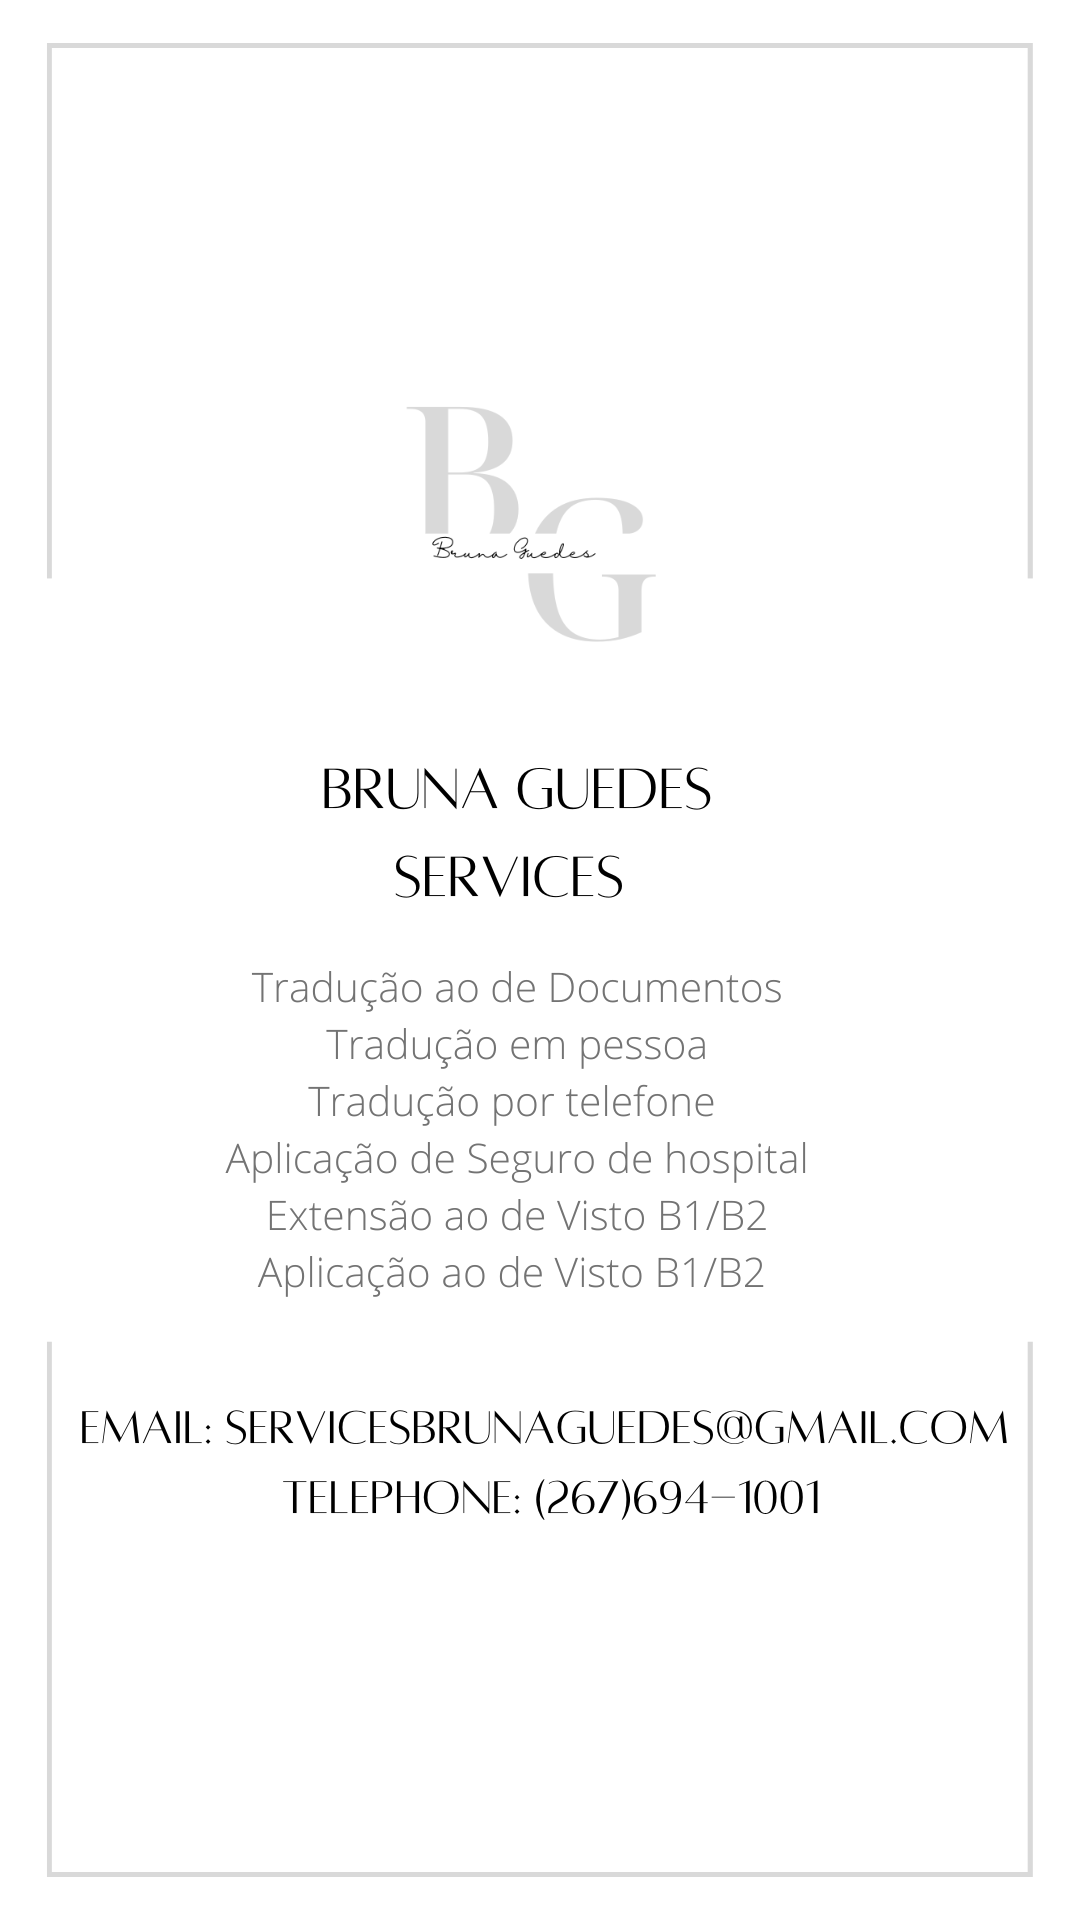 Bruna Guedes Services